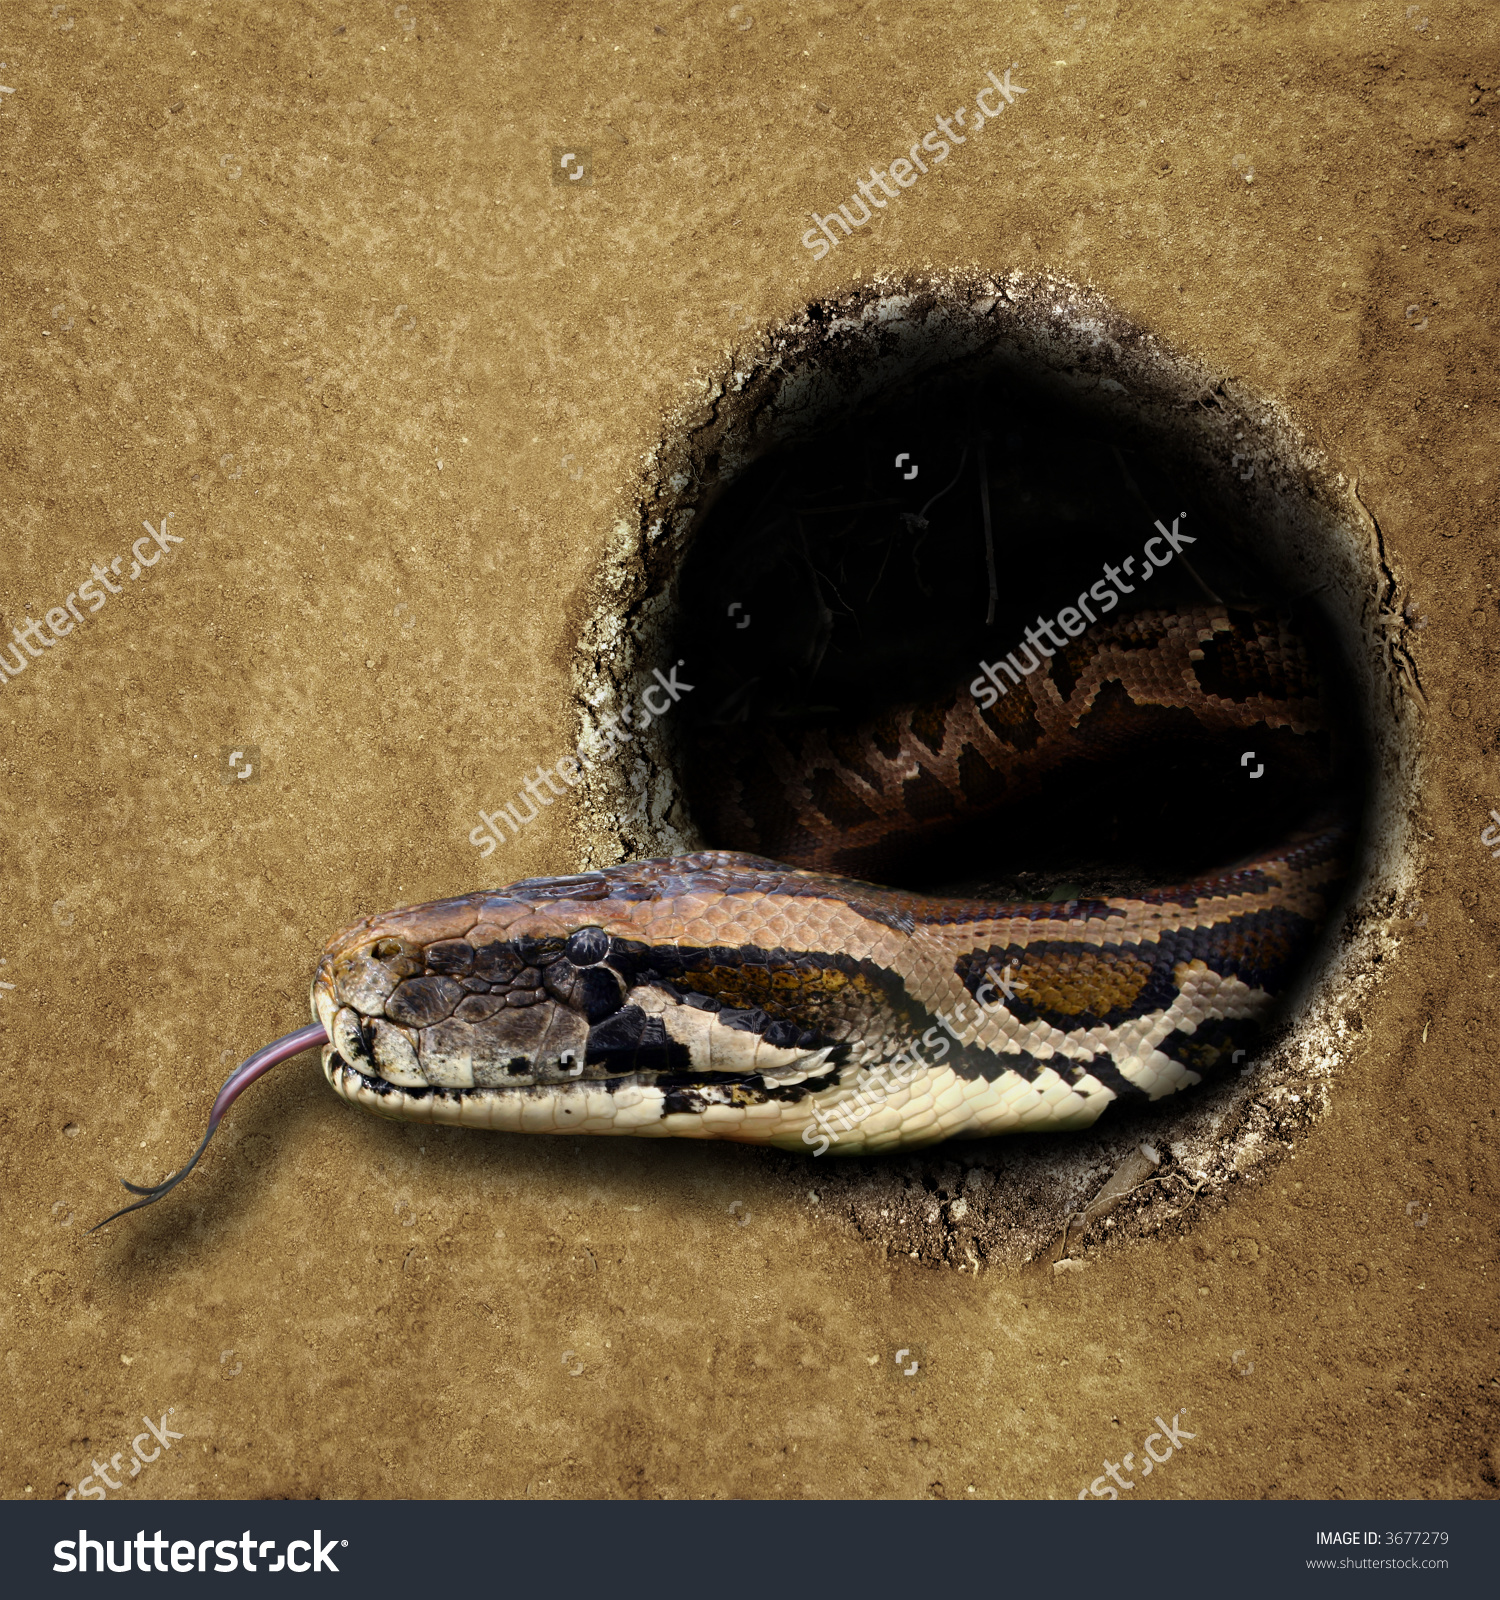 Hole Ground Snake Burmese Python Python Stock Photo 3677279.